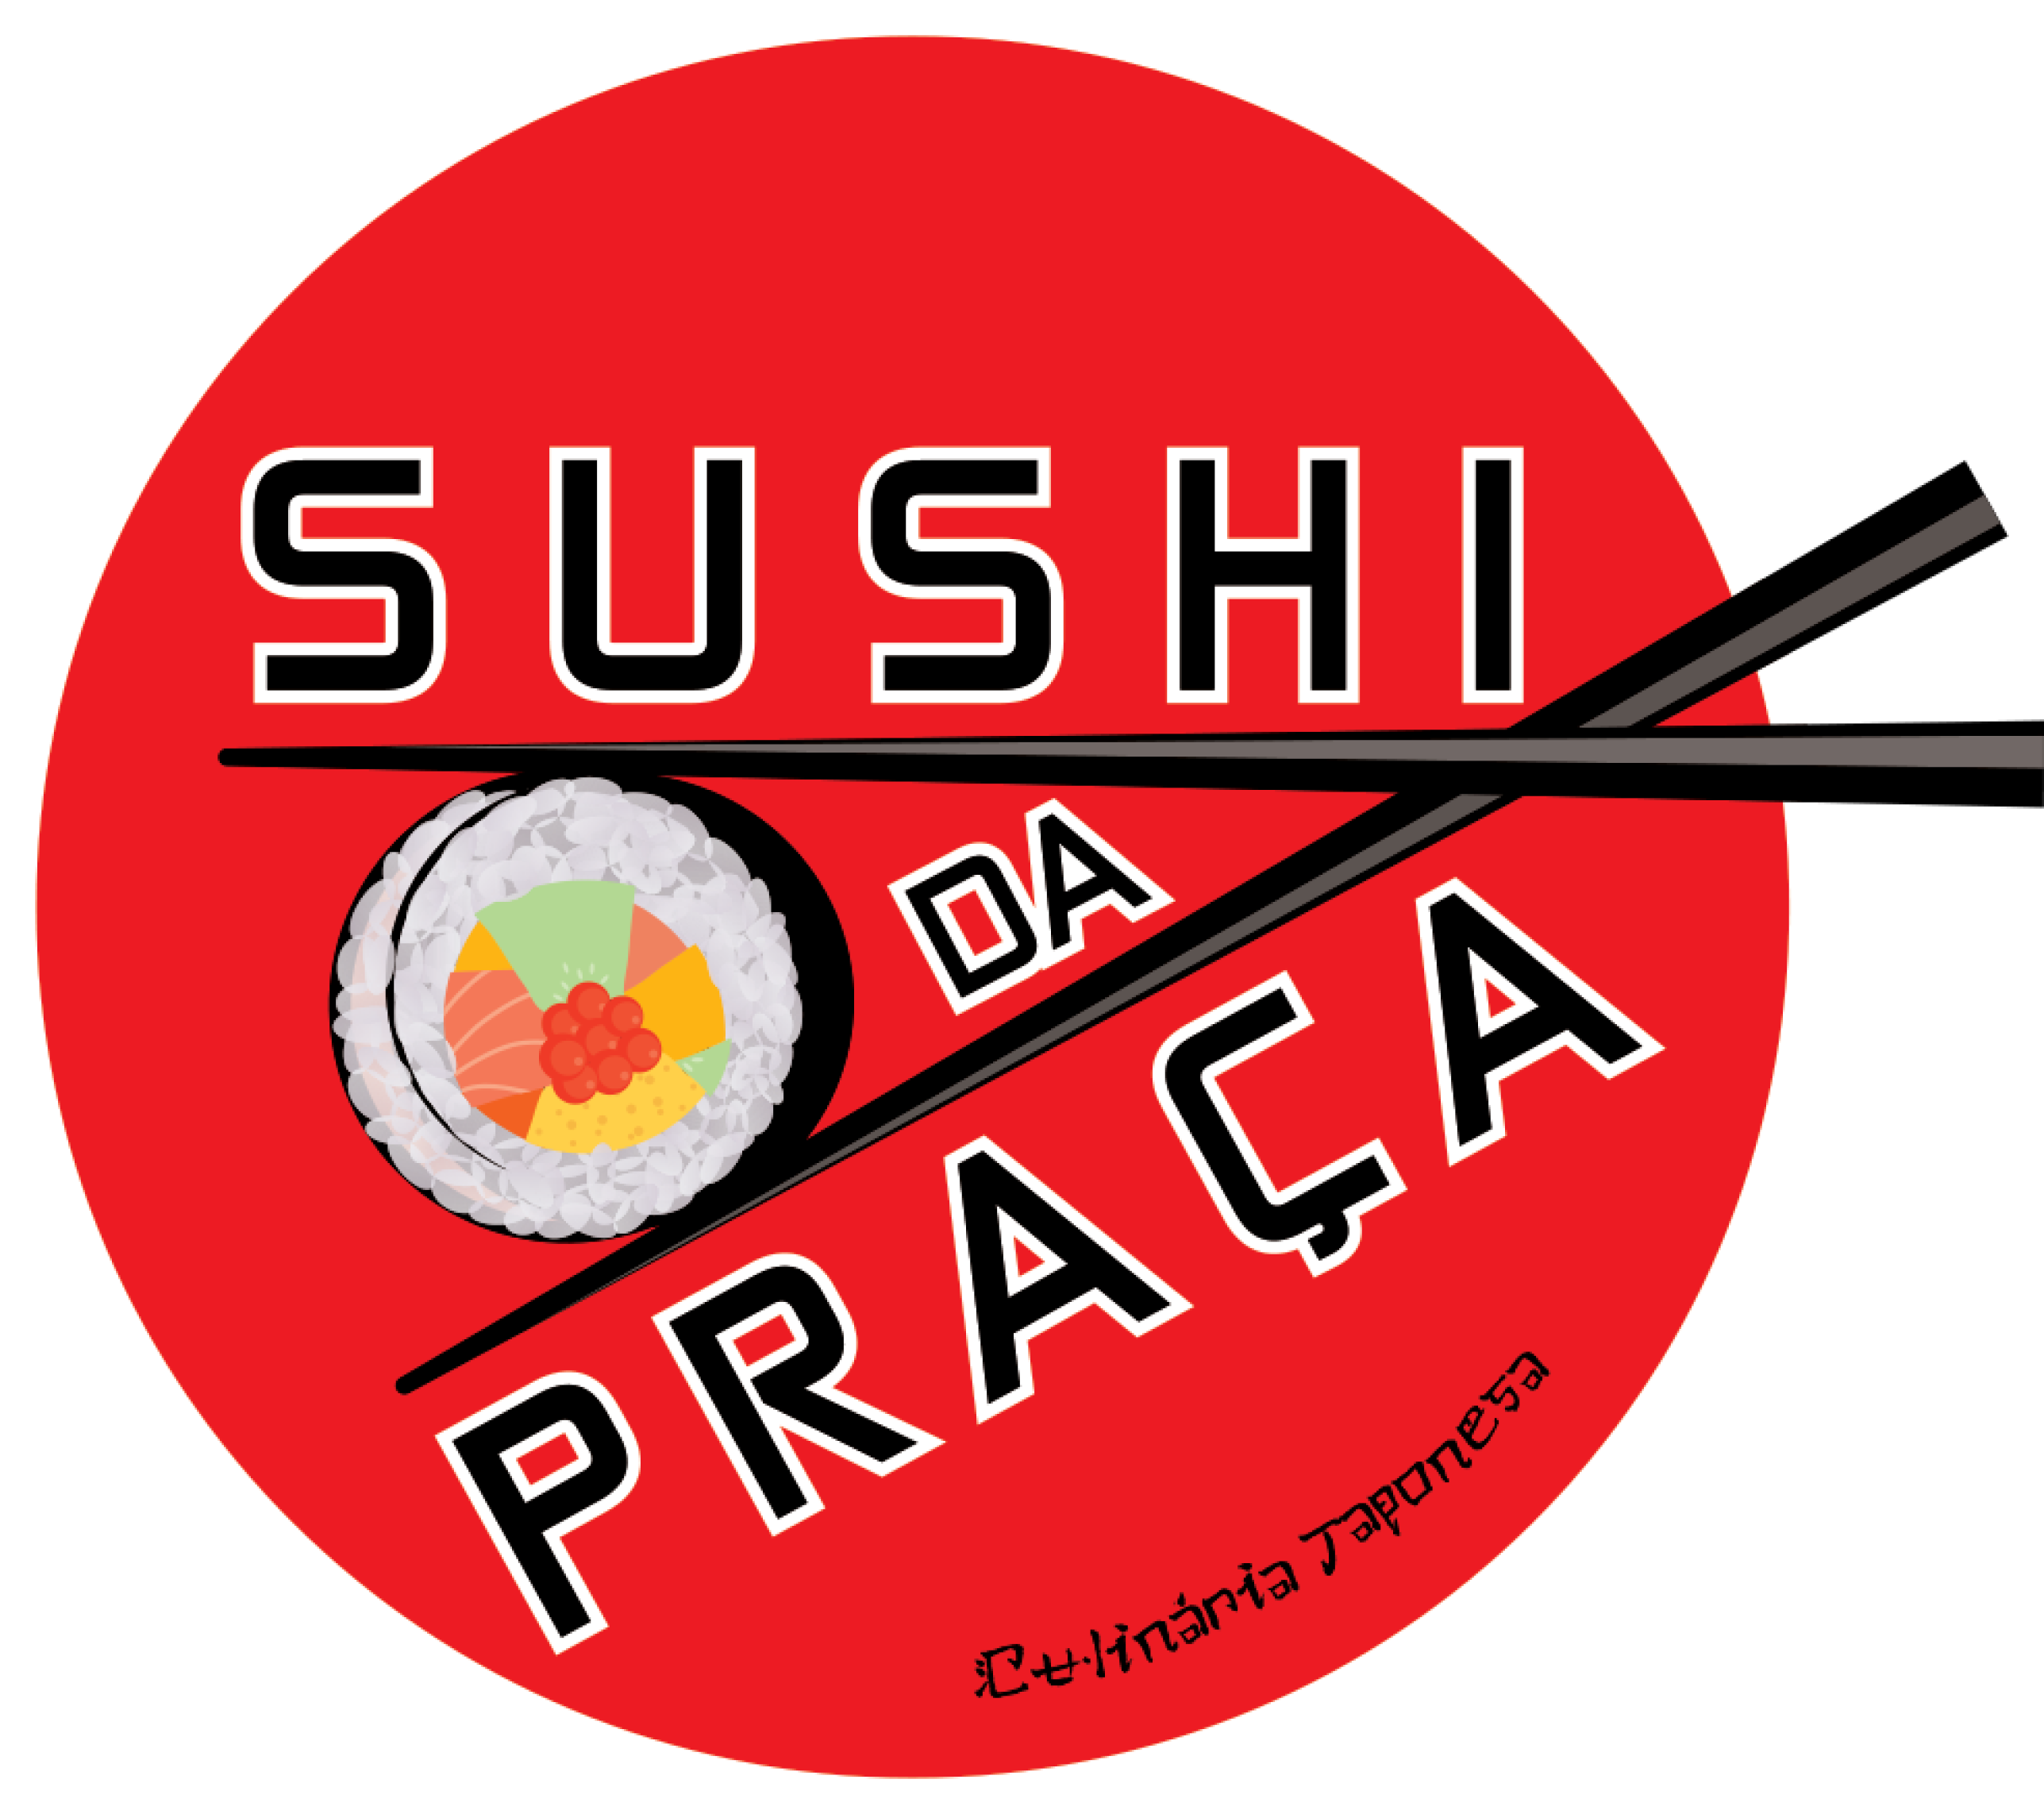 Sushi da Praça - Logo Vermelha